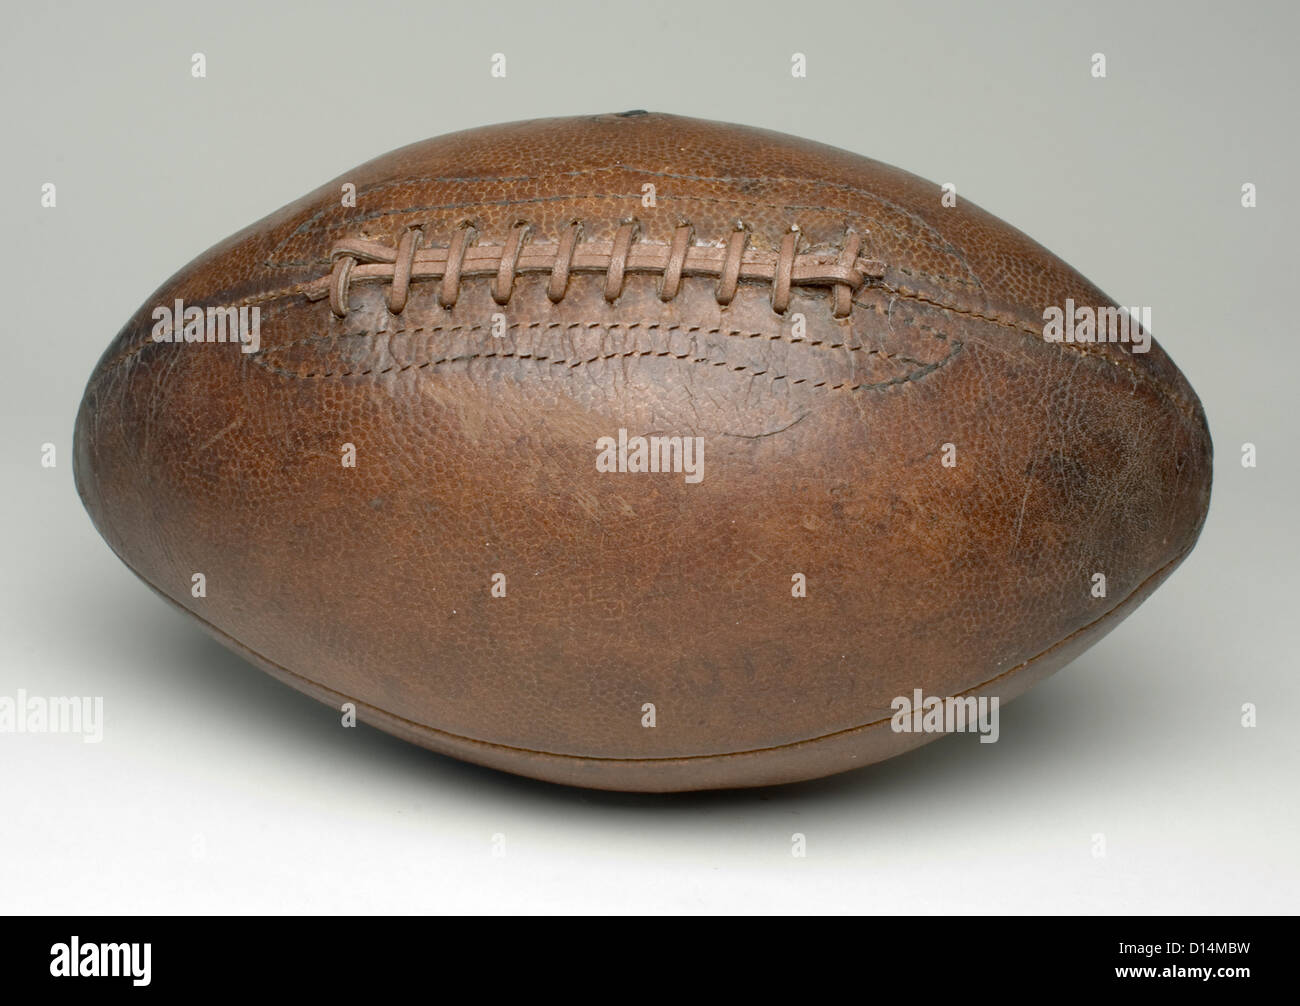 football on grey surface Stock Photo